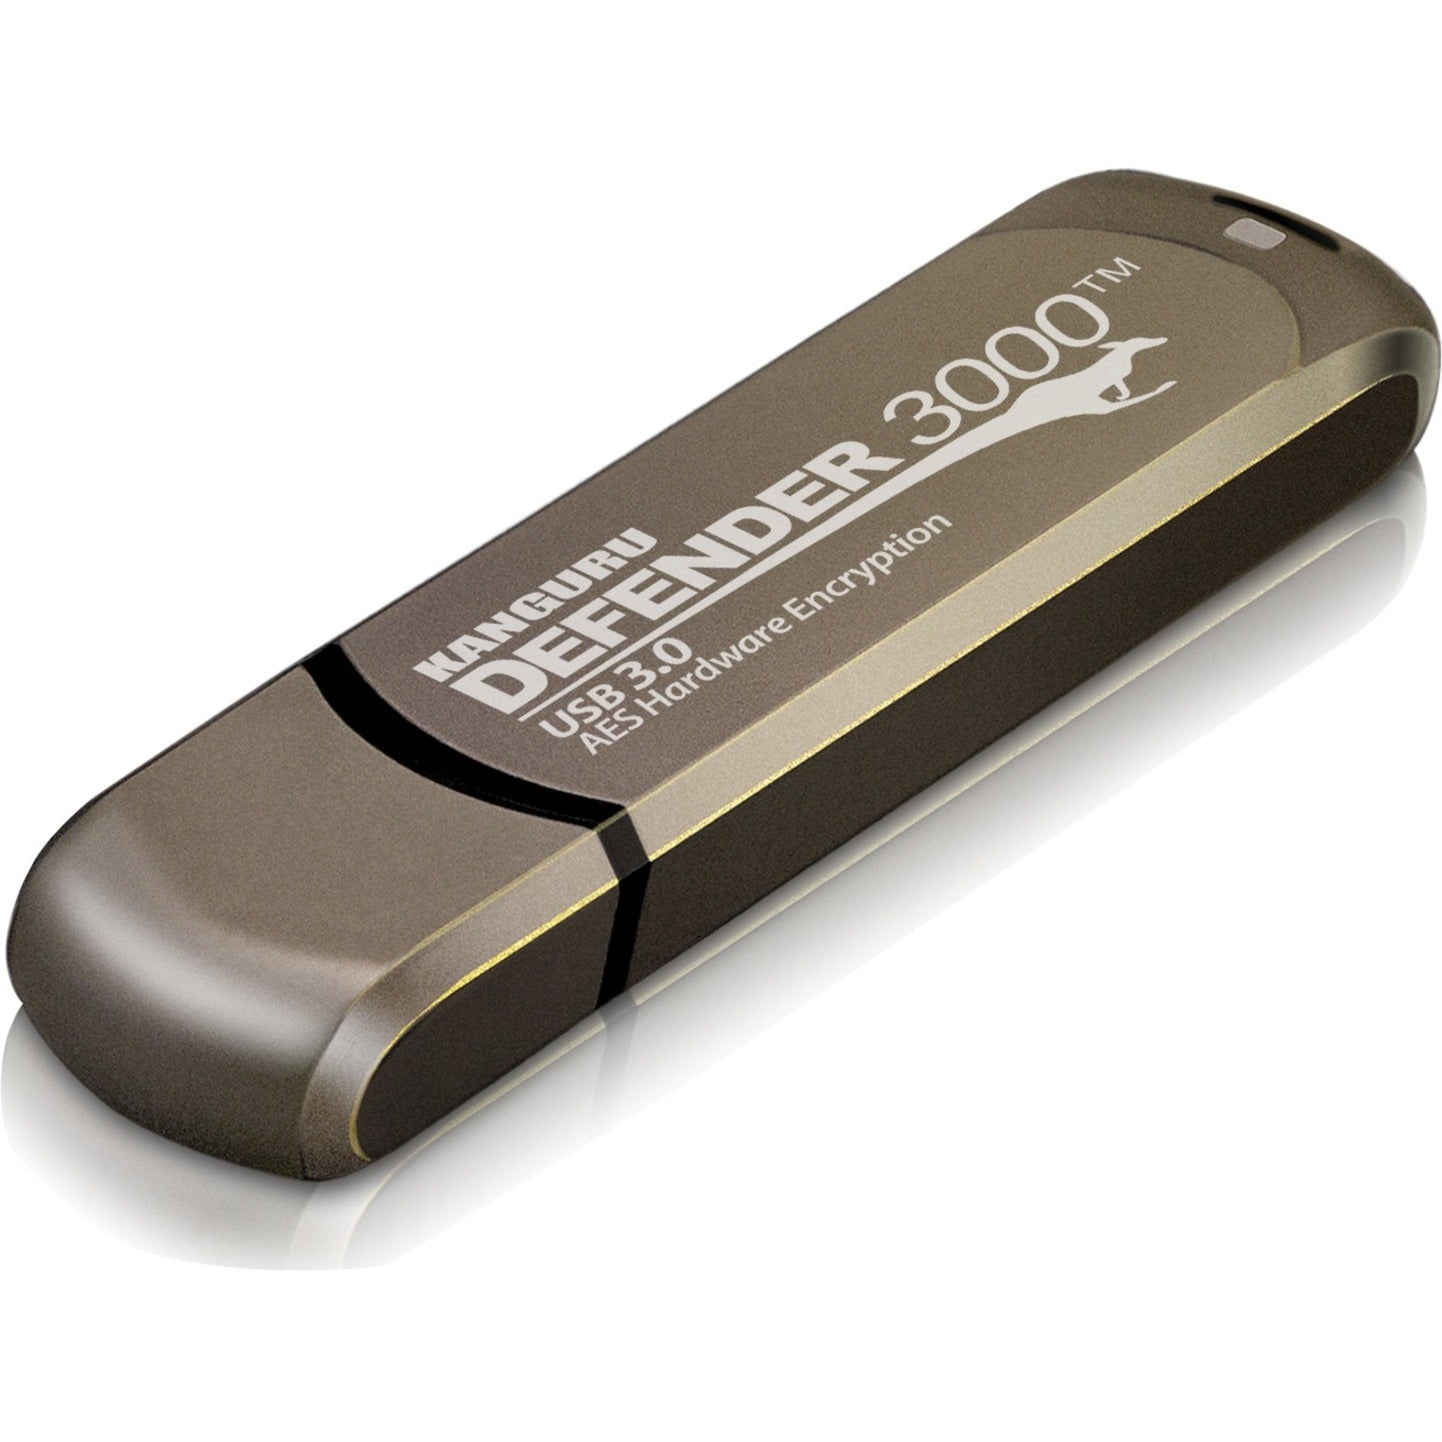 Kanguru KDF3000-16G Defender 3000 FIPS 140-2 Certified Level 3 SuperSpeed USB 3.0 Flash Drive, 16GB